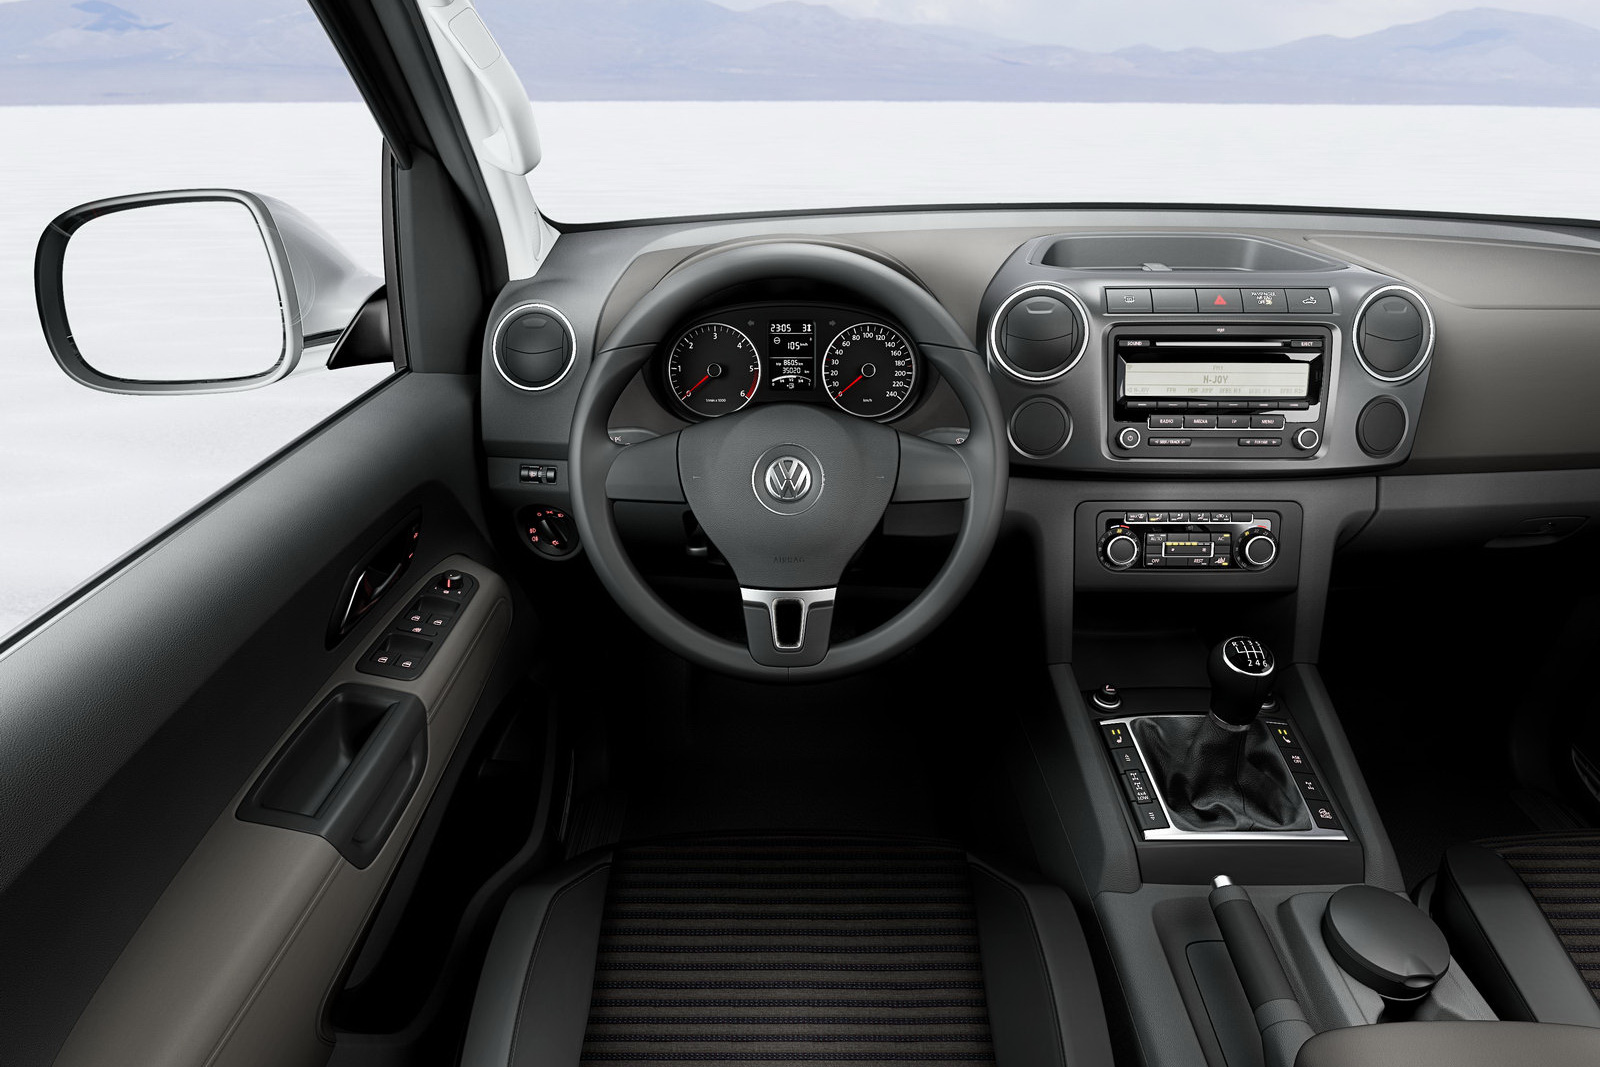 Volkswagen Amarok debuteaza in Europa. Costa sub 25.000 Euro - Volkswagen Amarok debuteaza in Europa. Costa sub 25.000 Euro